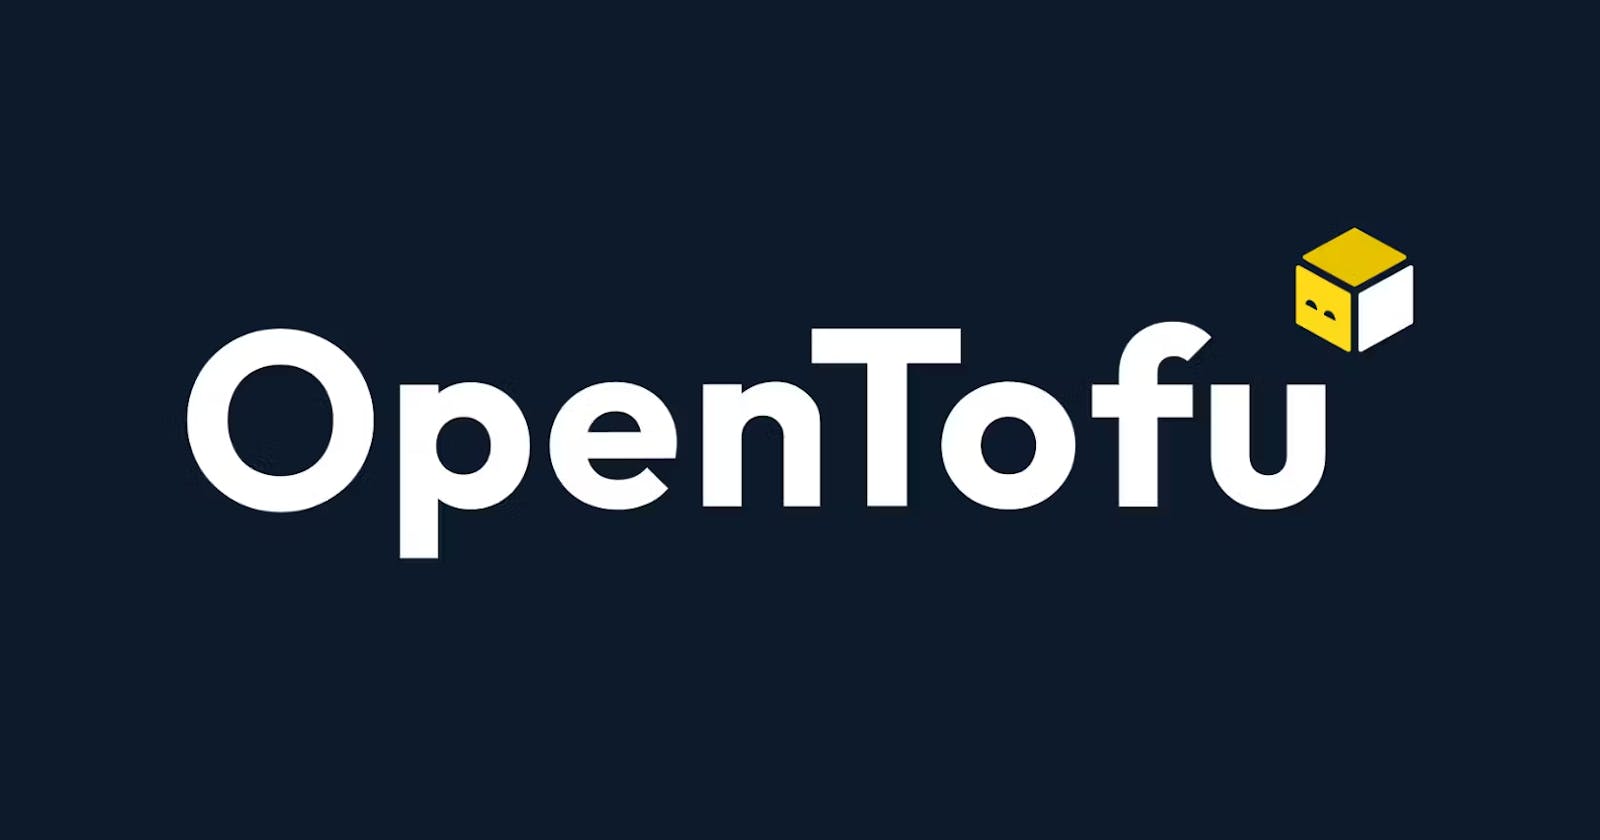 Upgraded my website infrastructure to OpenTofu